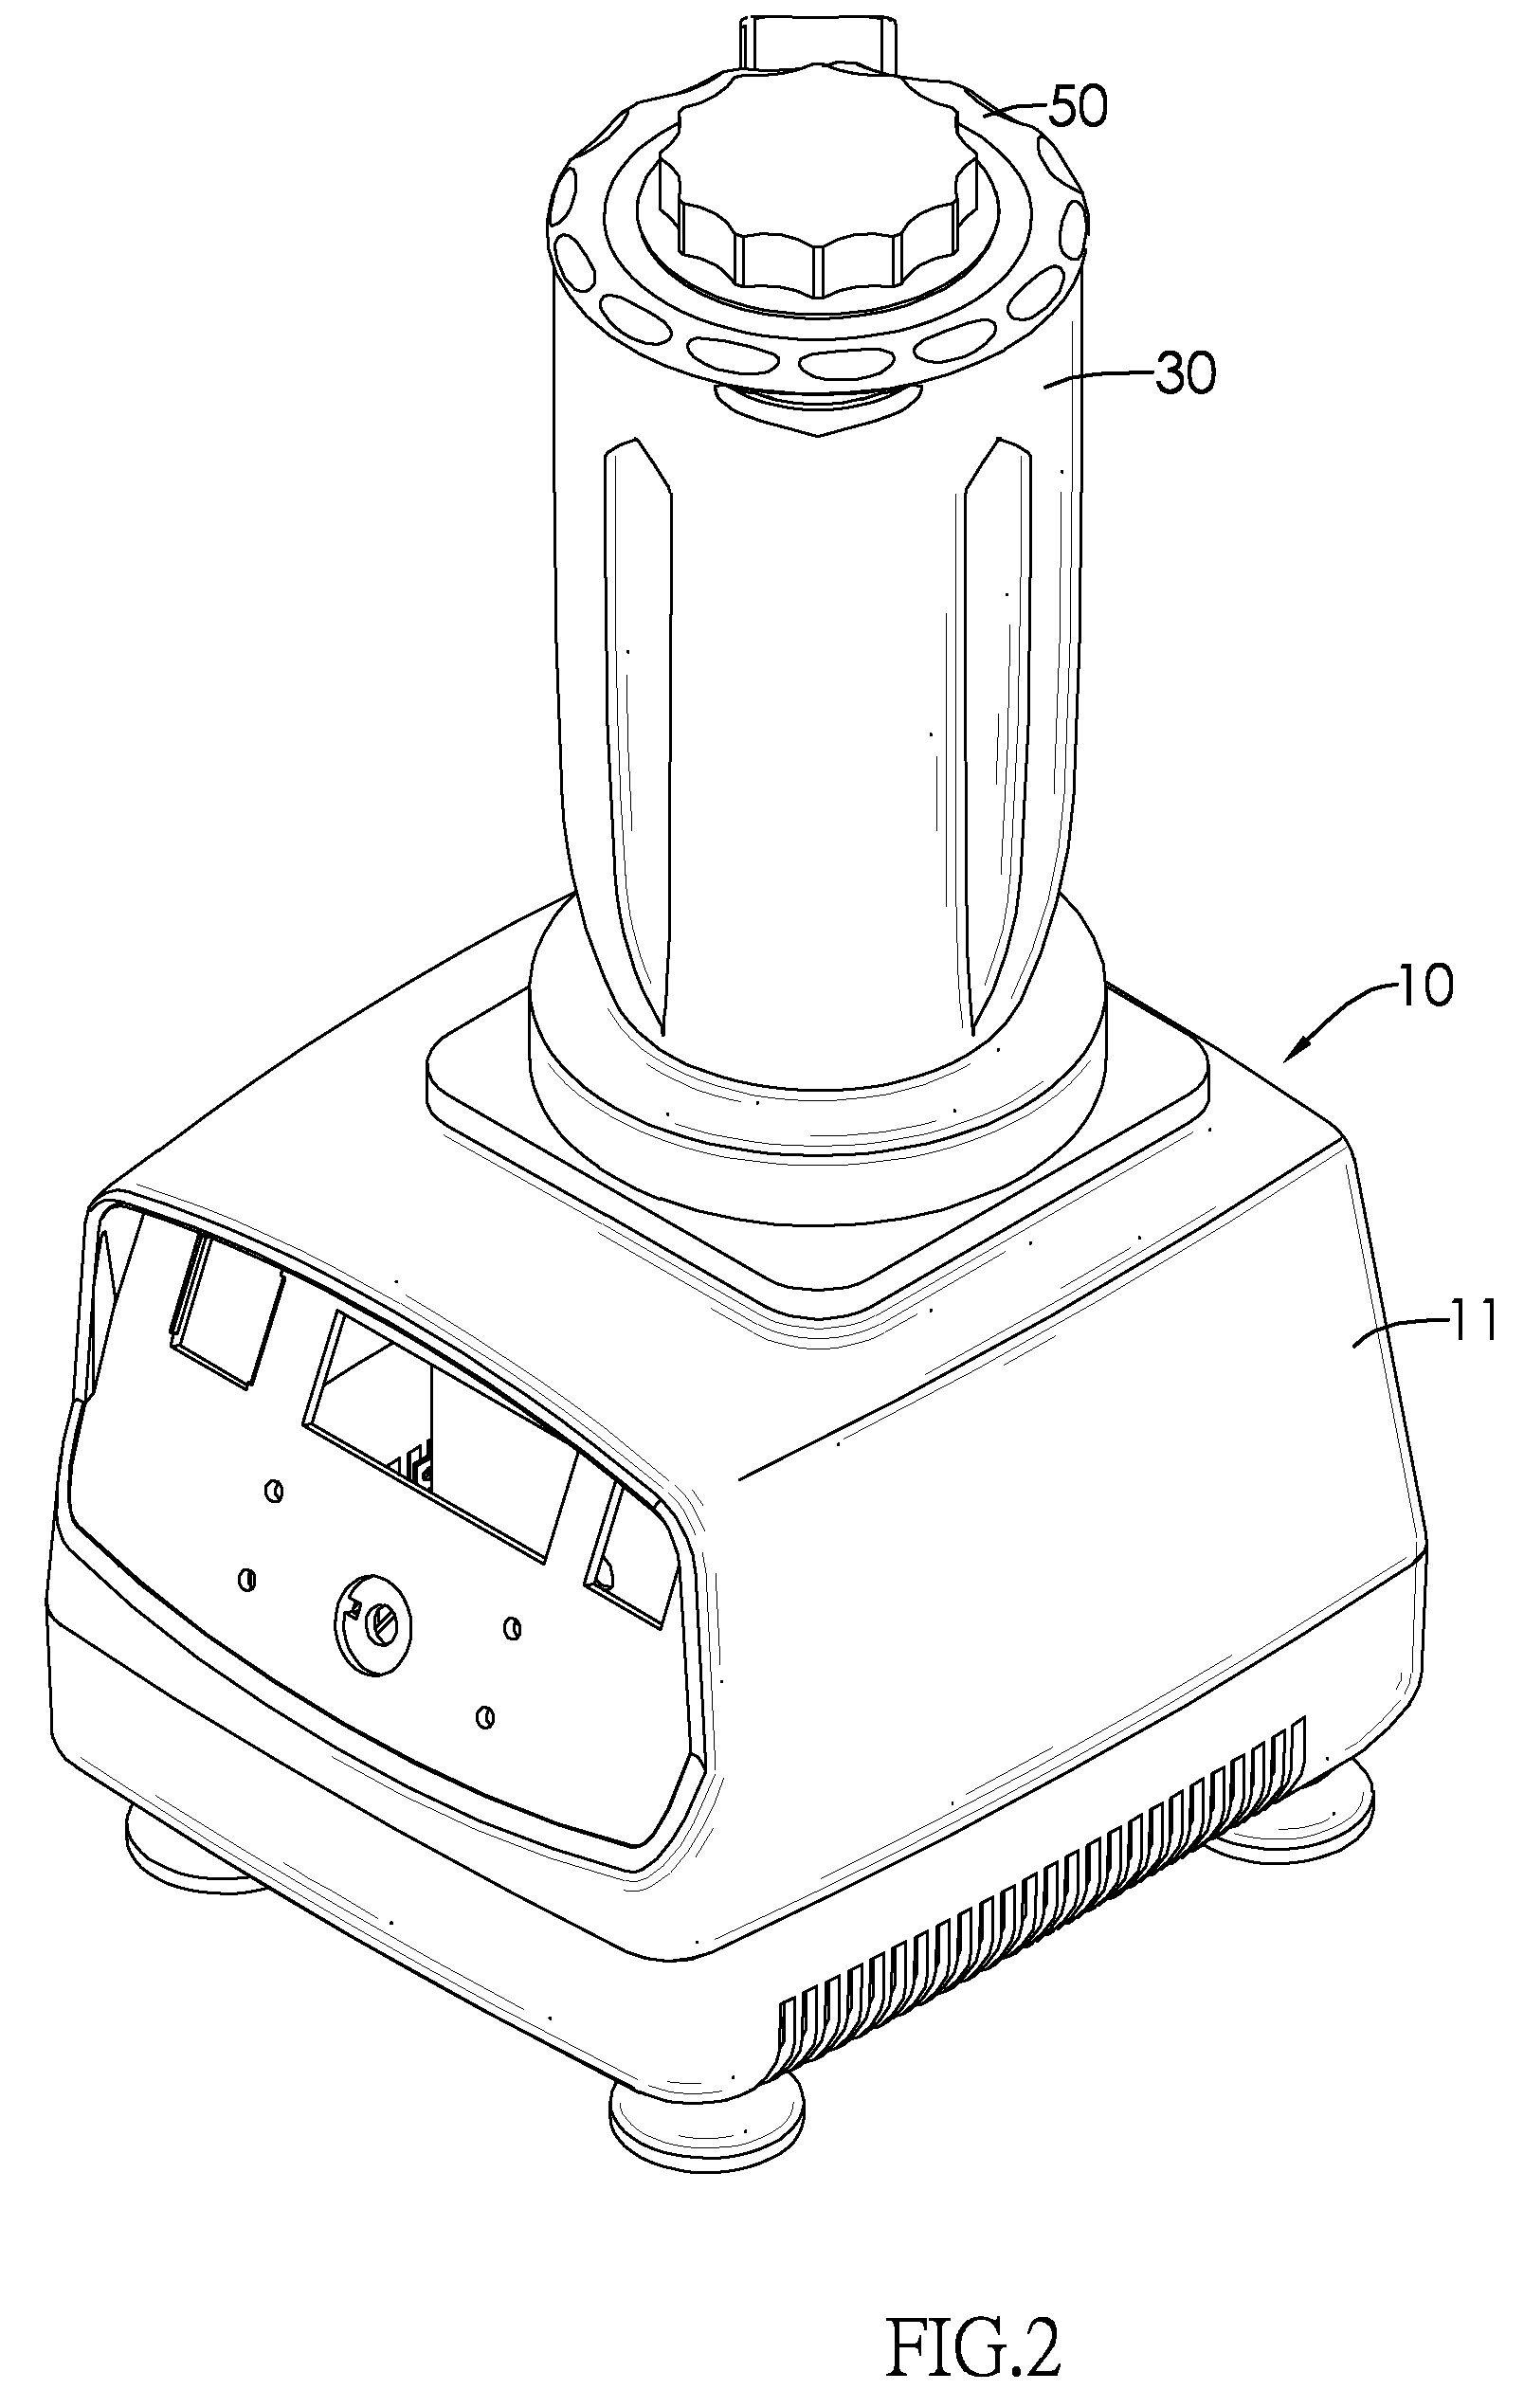 Blender with stirring disk